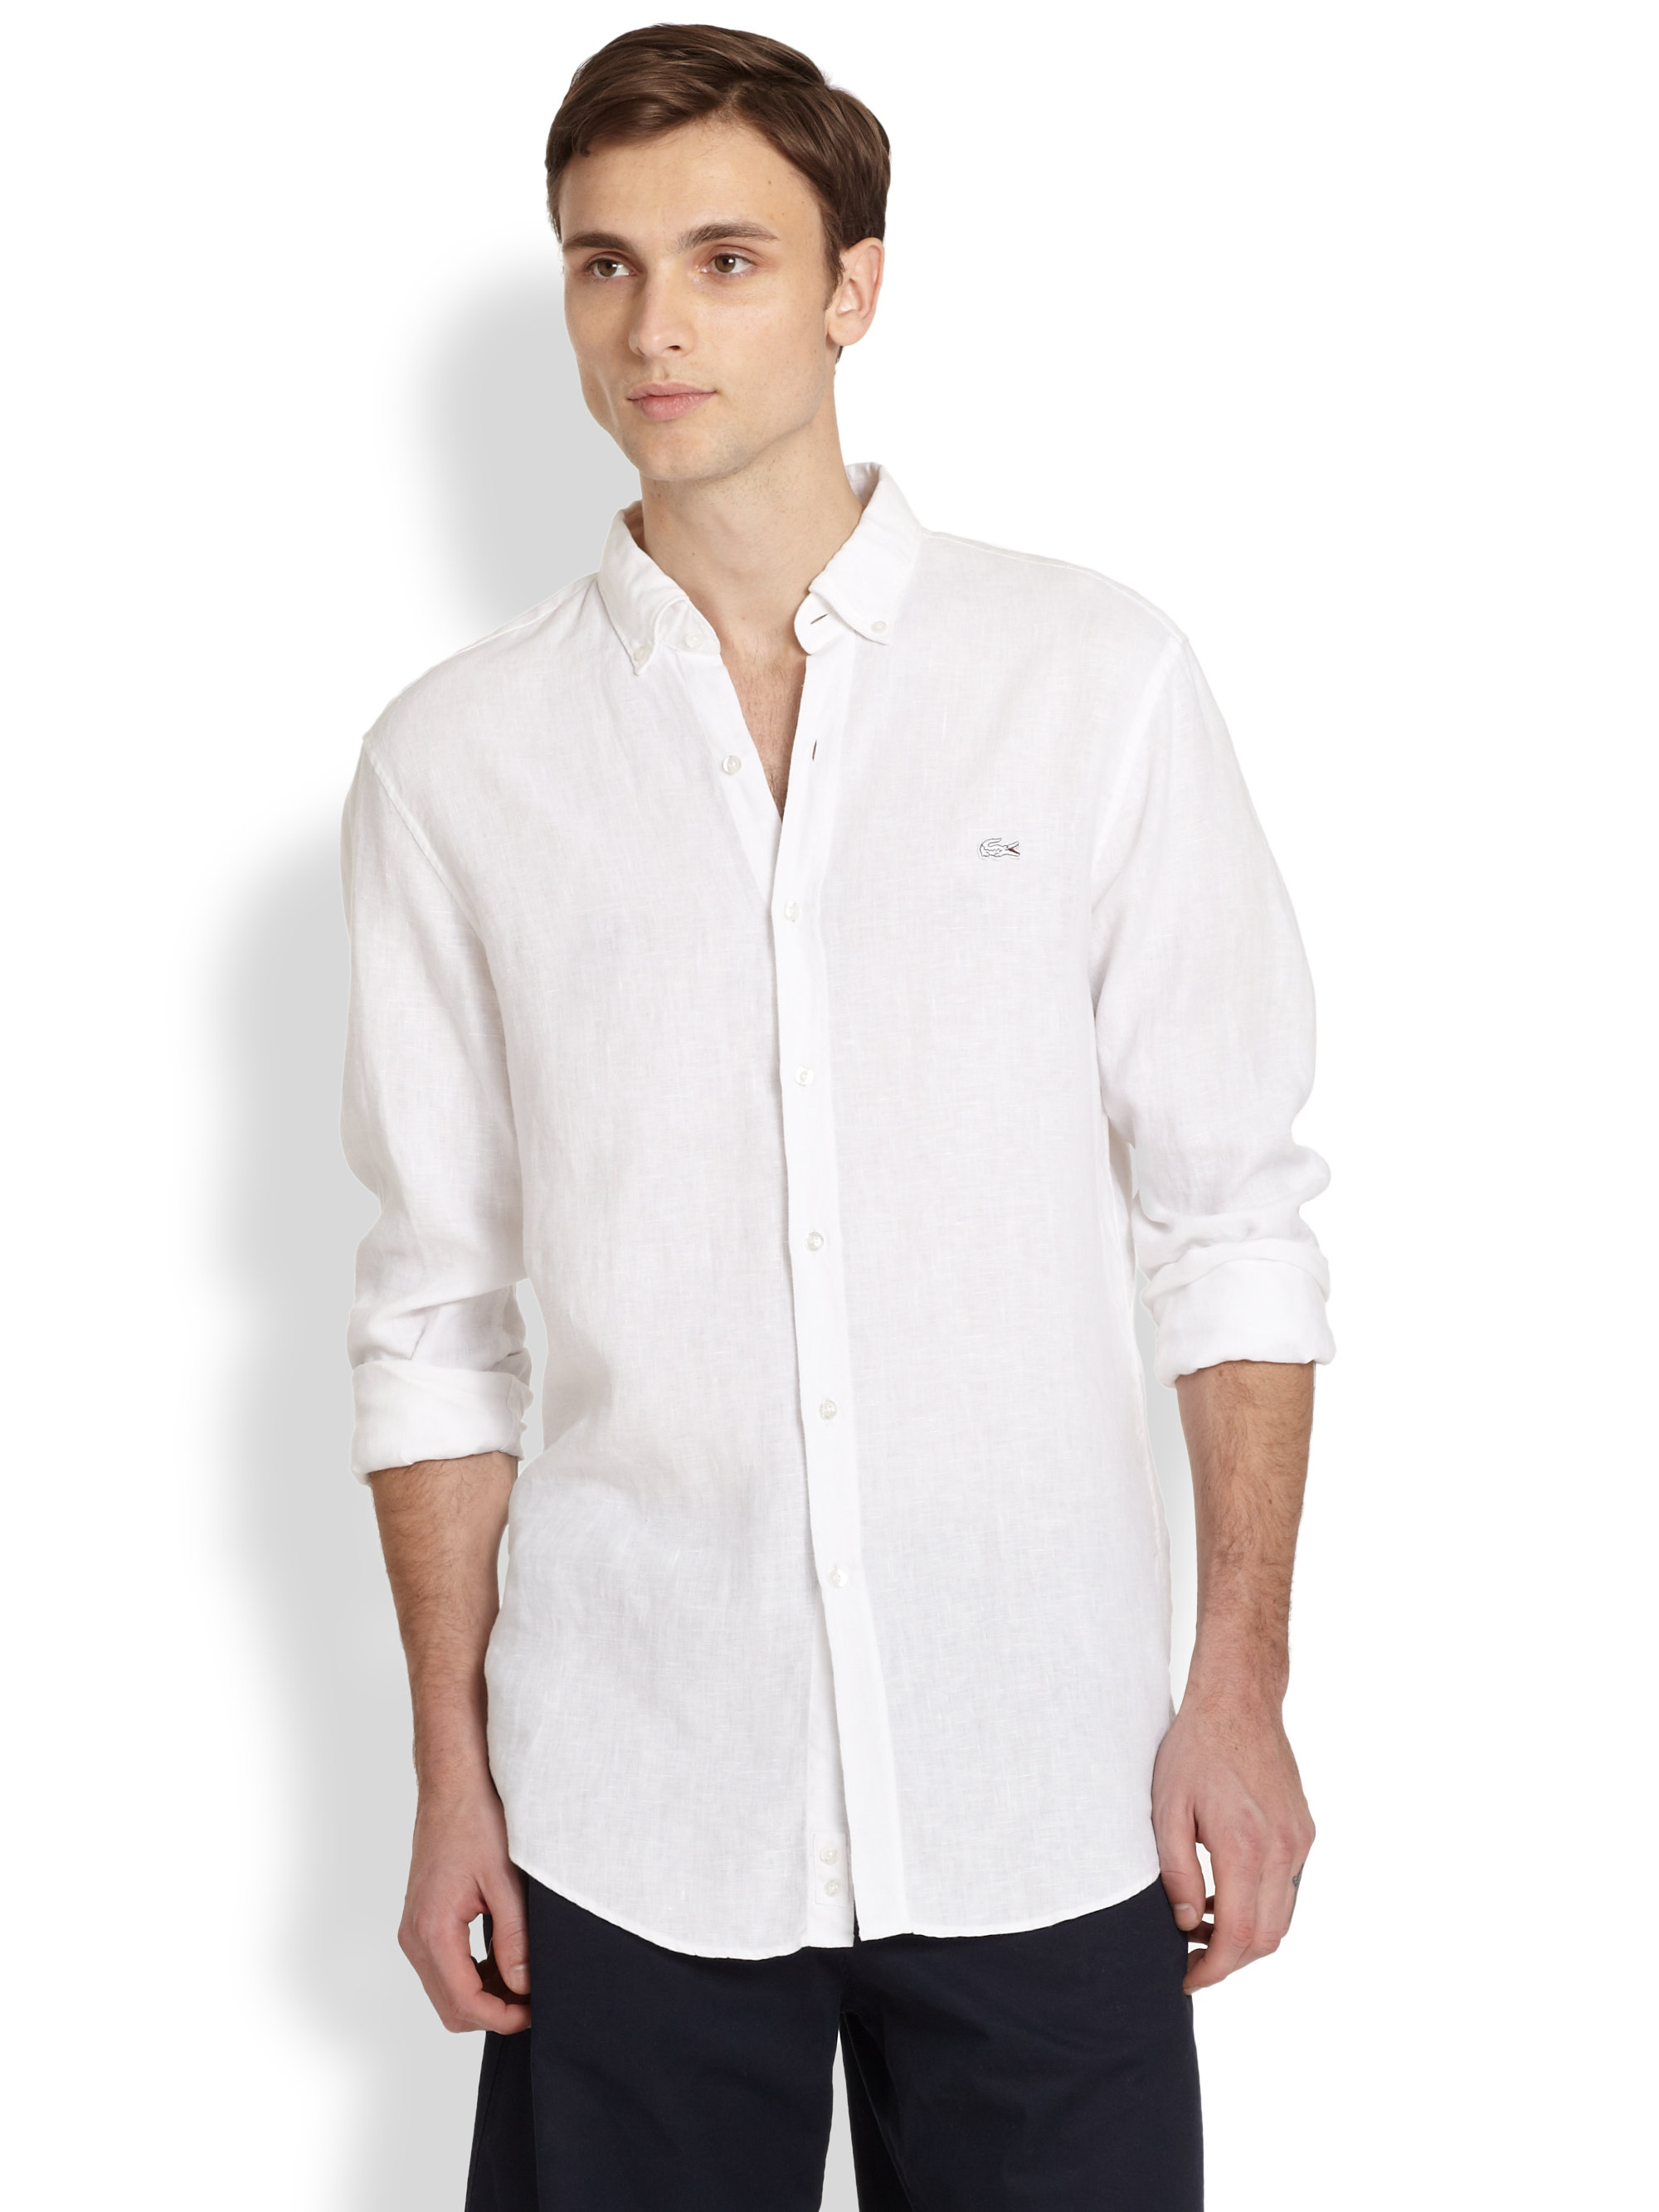 Lacoste Brehal Linen Buttondown Shirt in White for Men - Lyst